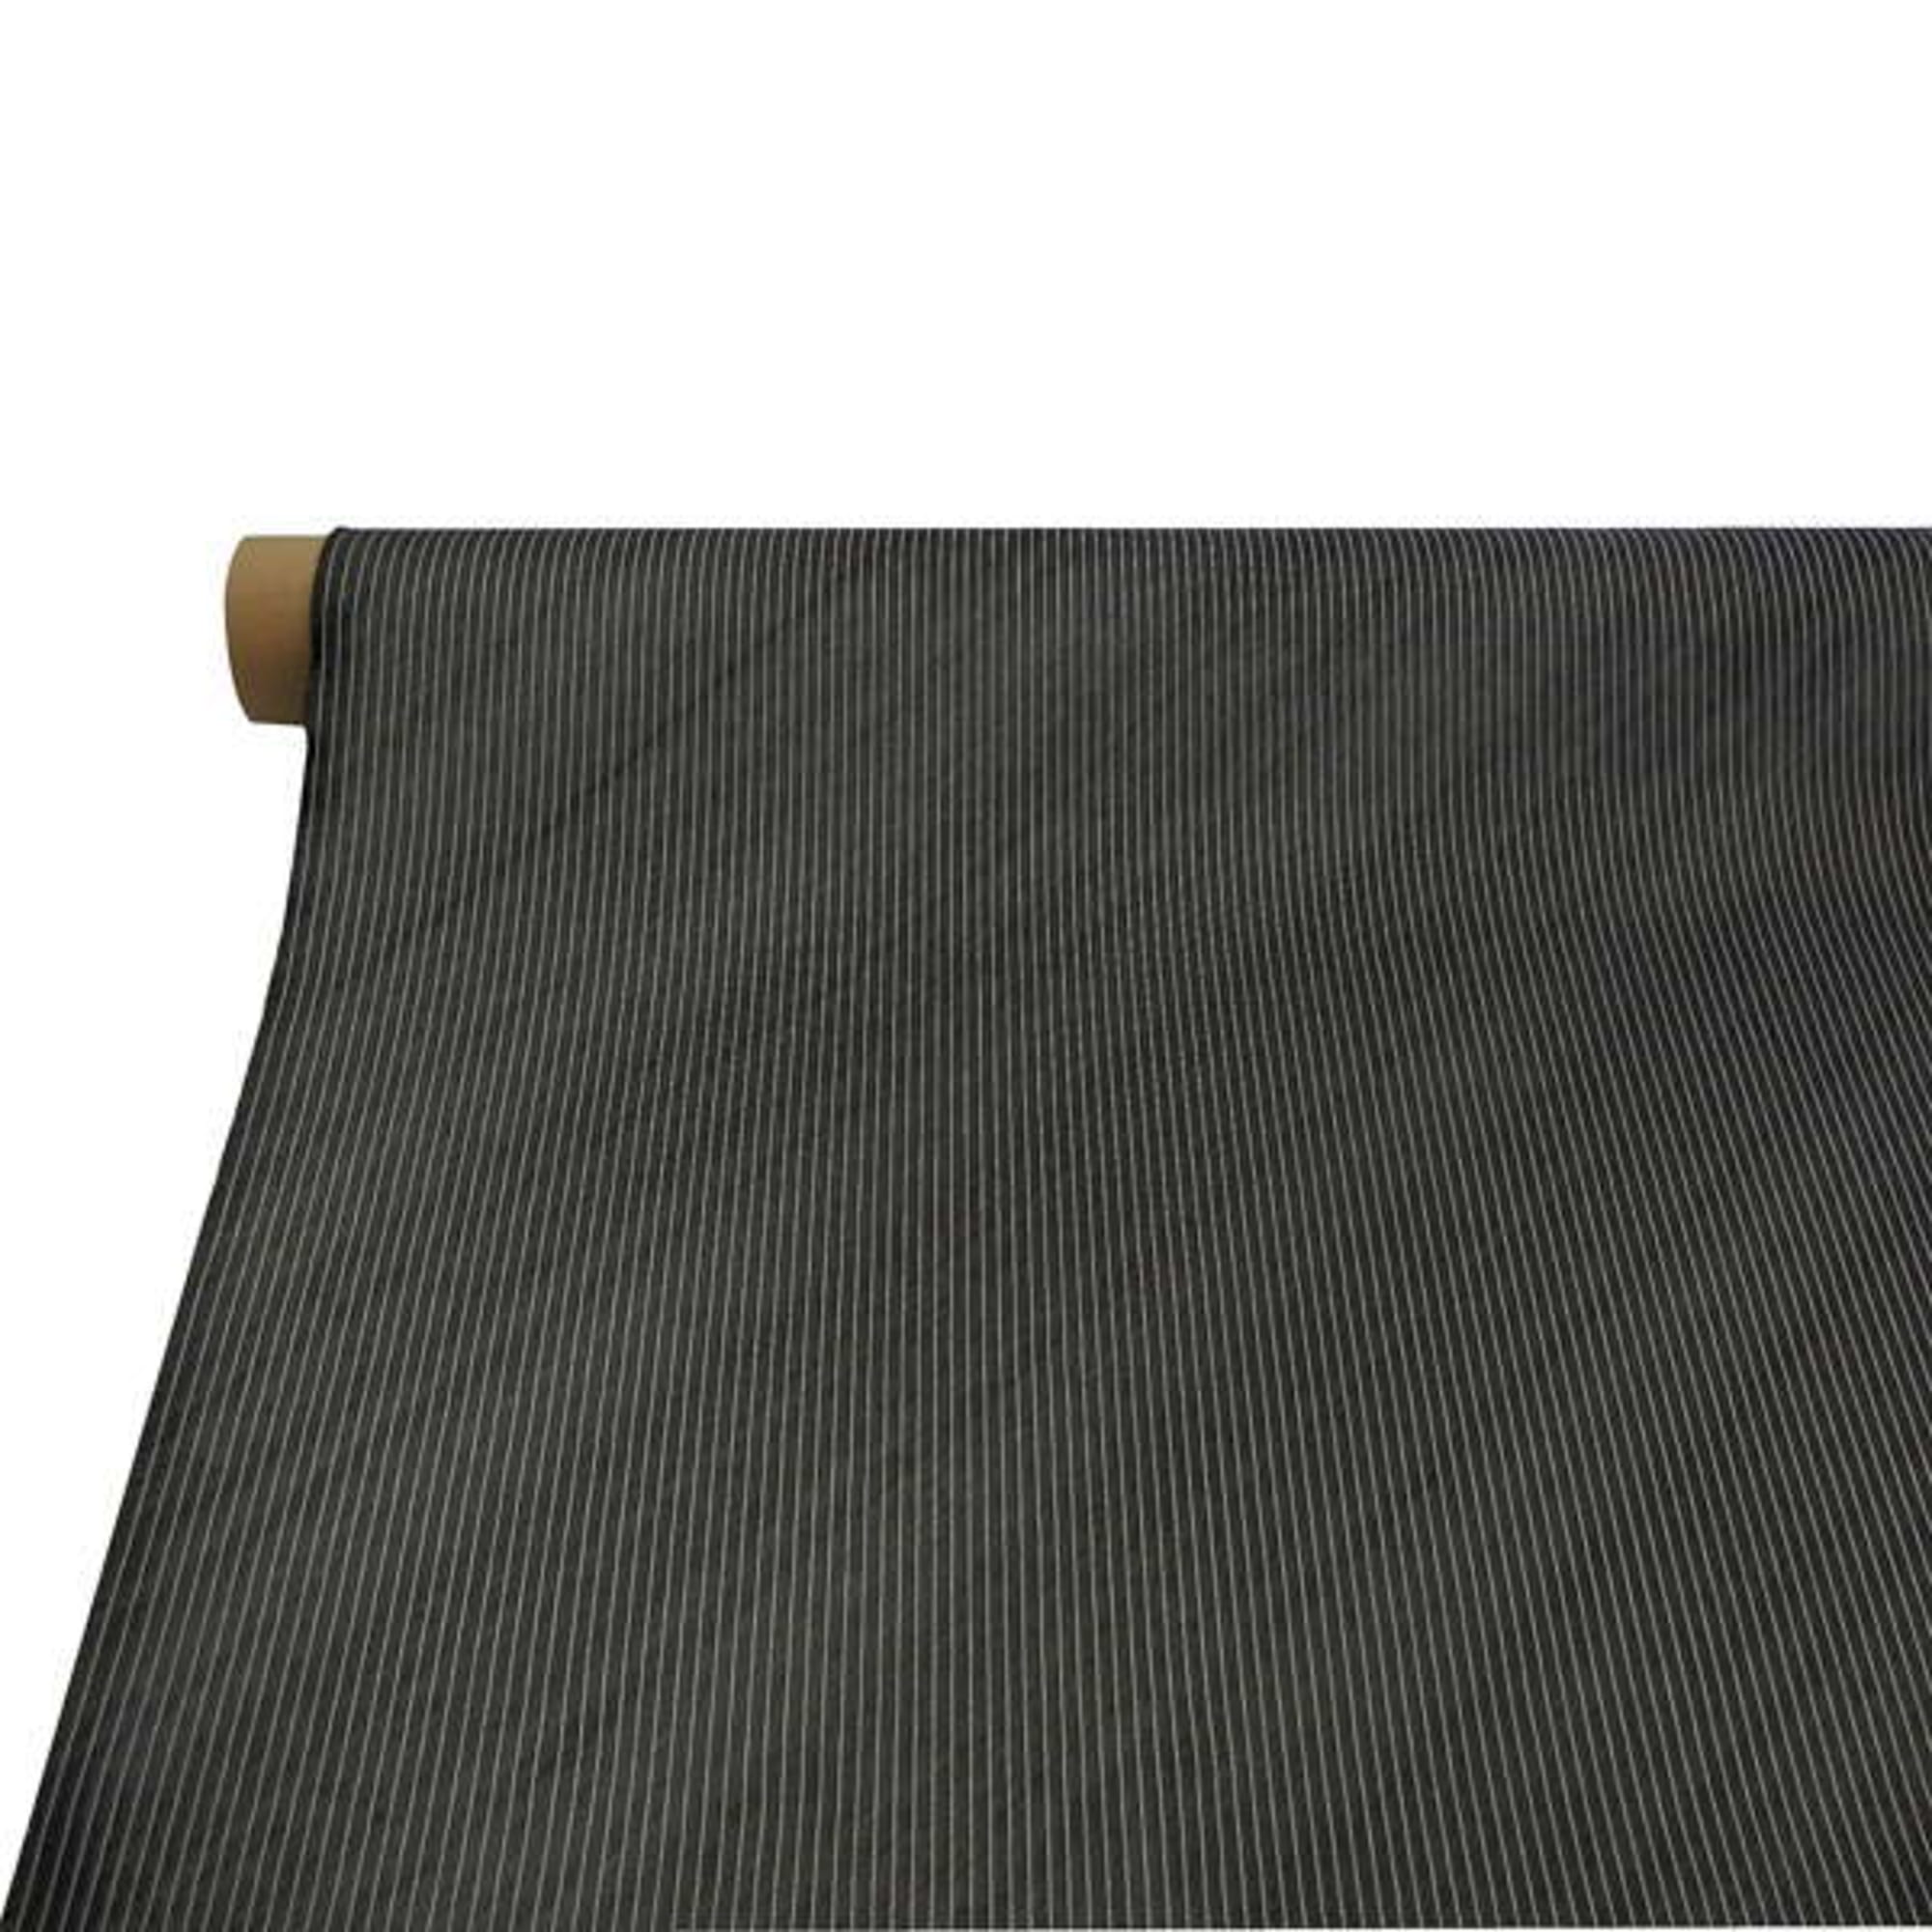 Carbon non-crimp fabric 200 g/m² (biaxial) 125 cm, image 2